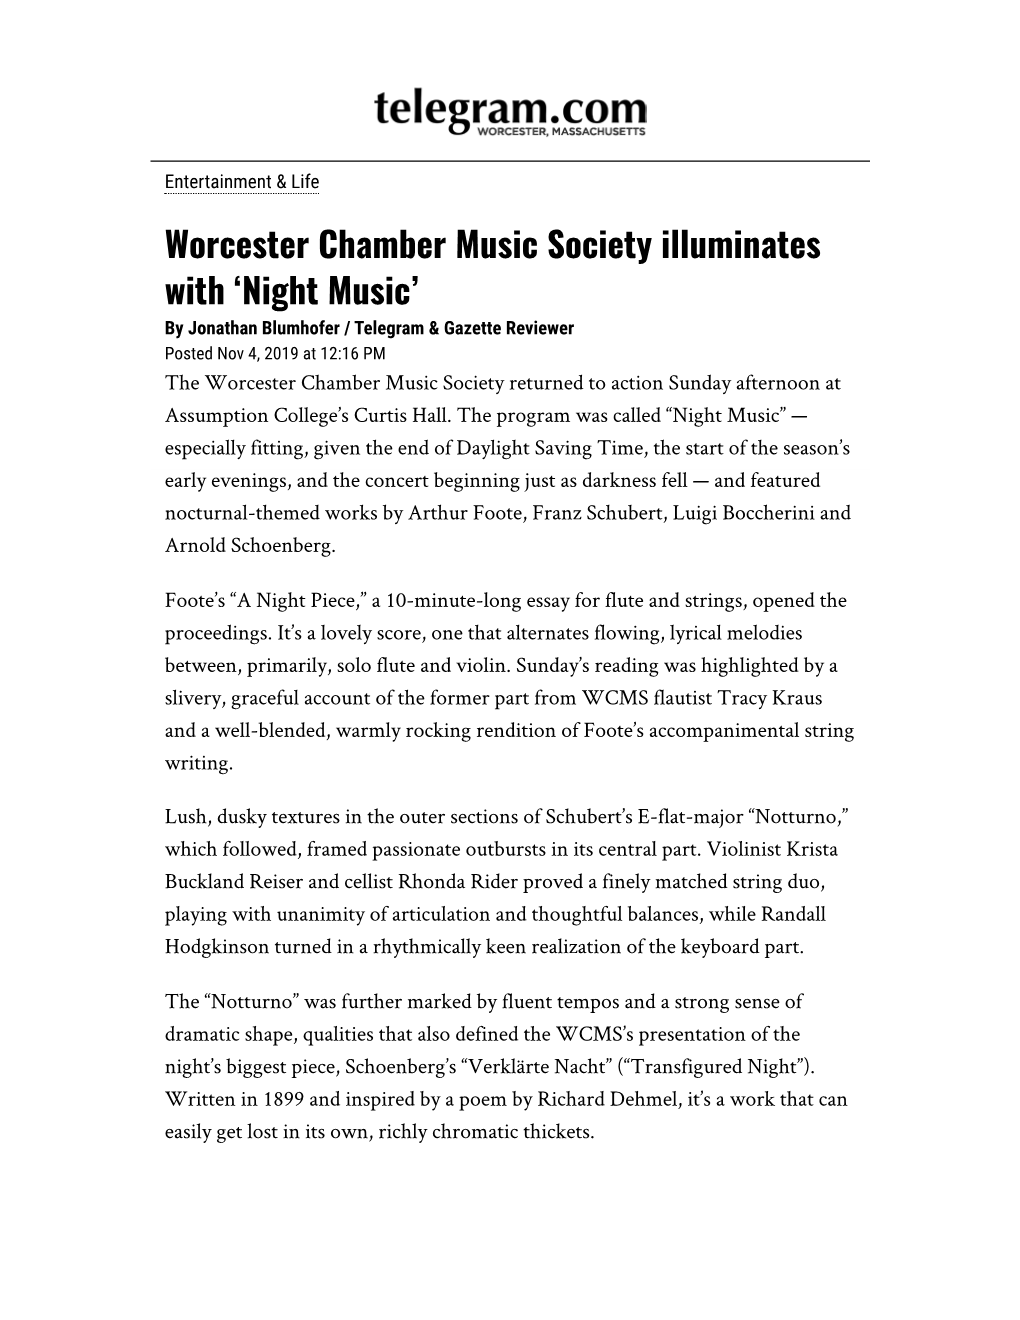 Worcester Chamber Music Society Illuminates with 'Night Music